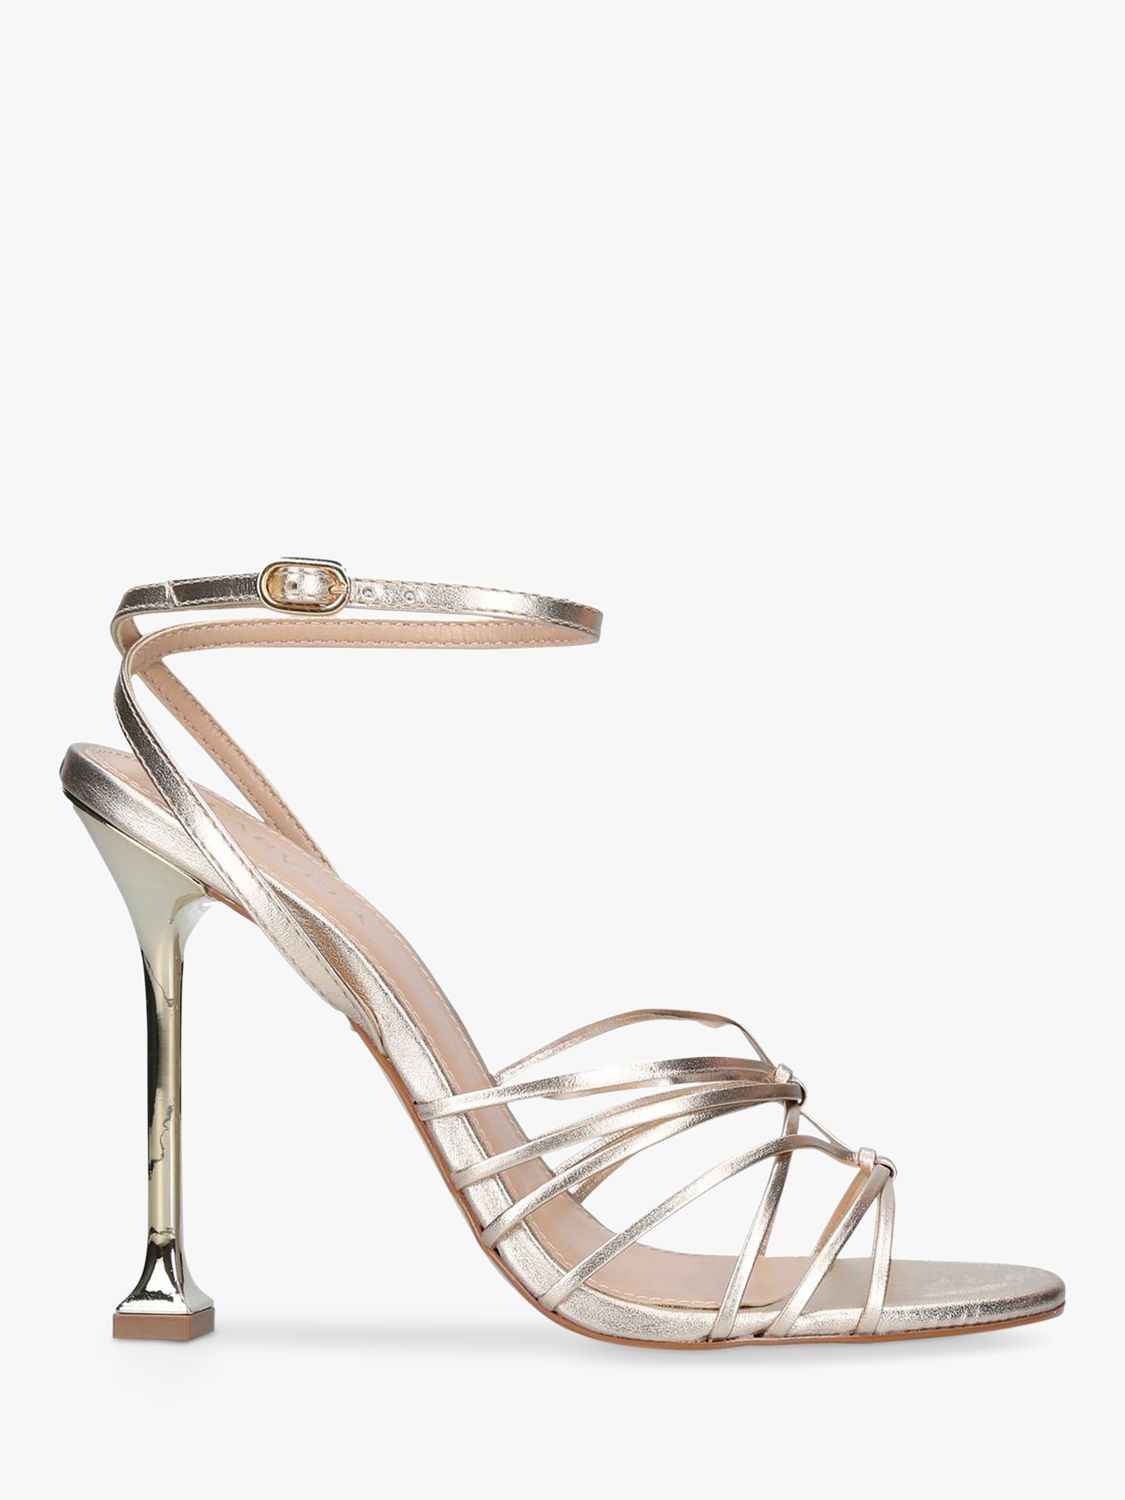 carvela strappy heels